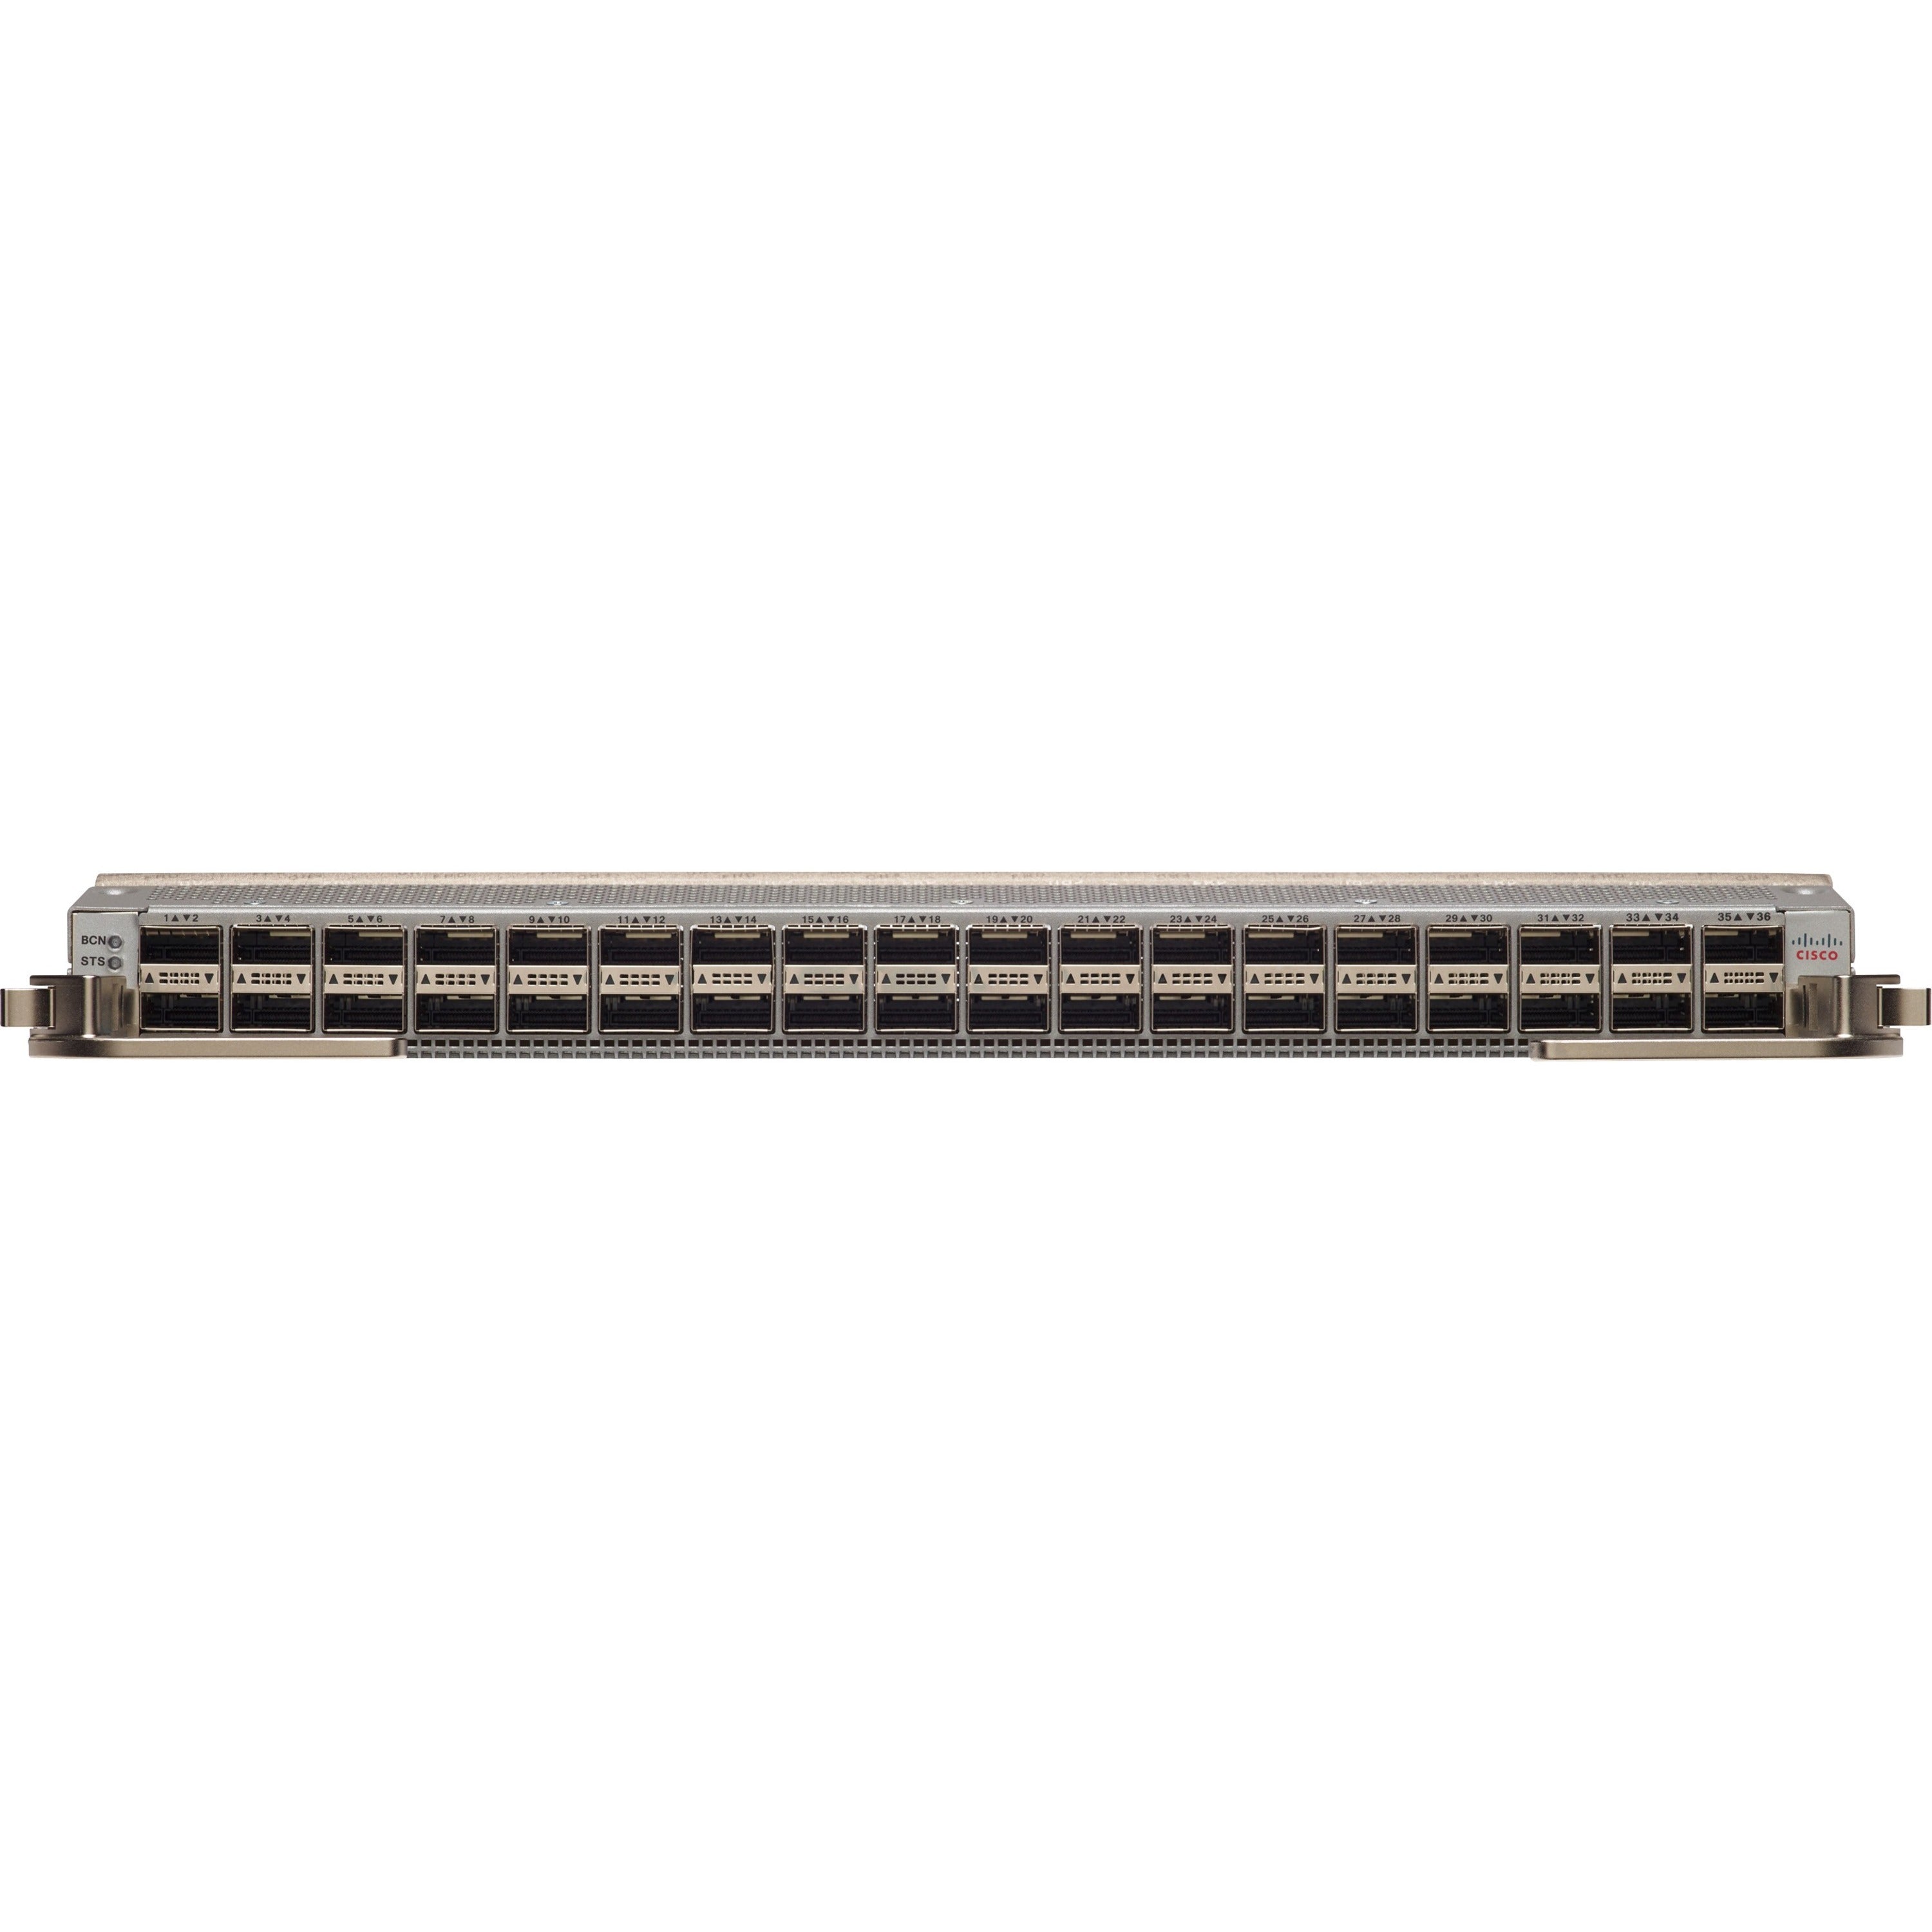 Cisco N9K-X9736C-EX: 100 Gigabit Ethernet Line Card - N9K-X9736C-EX